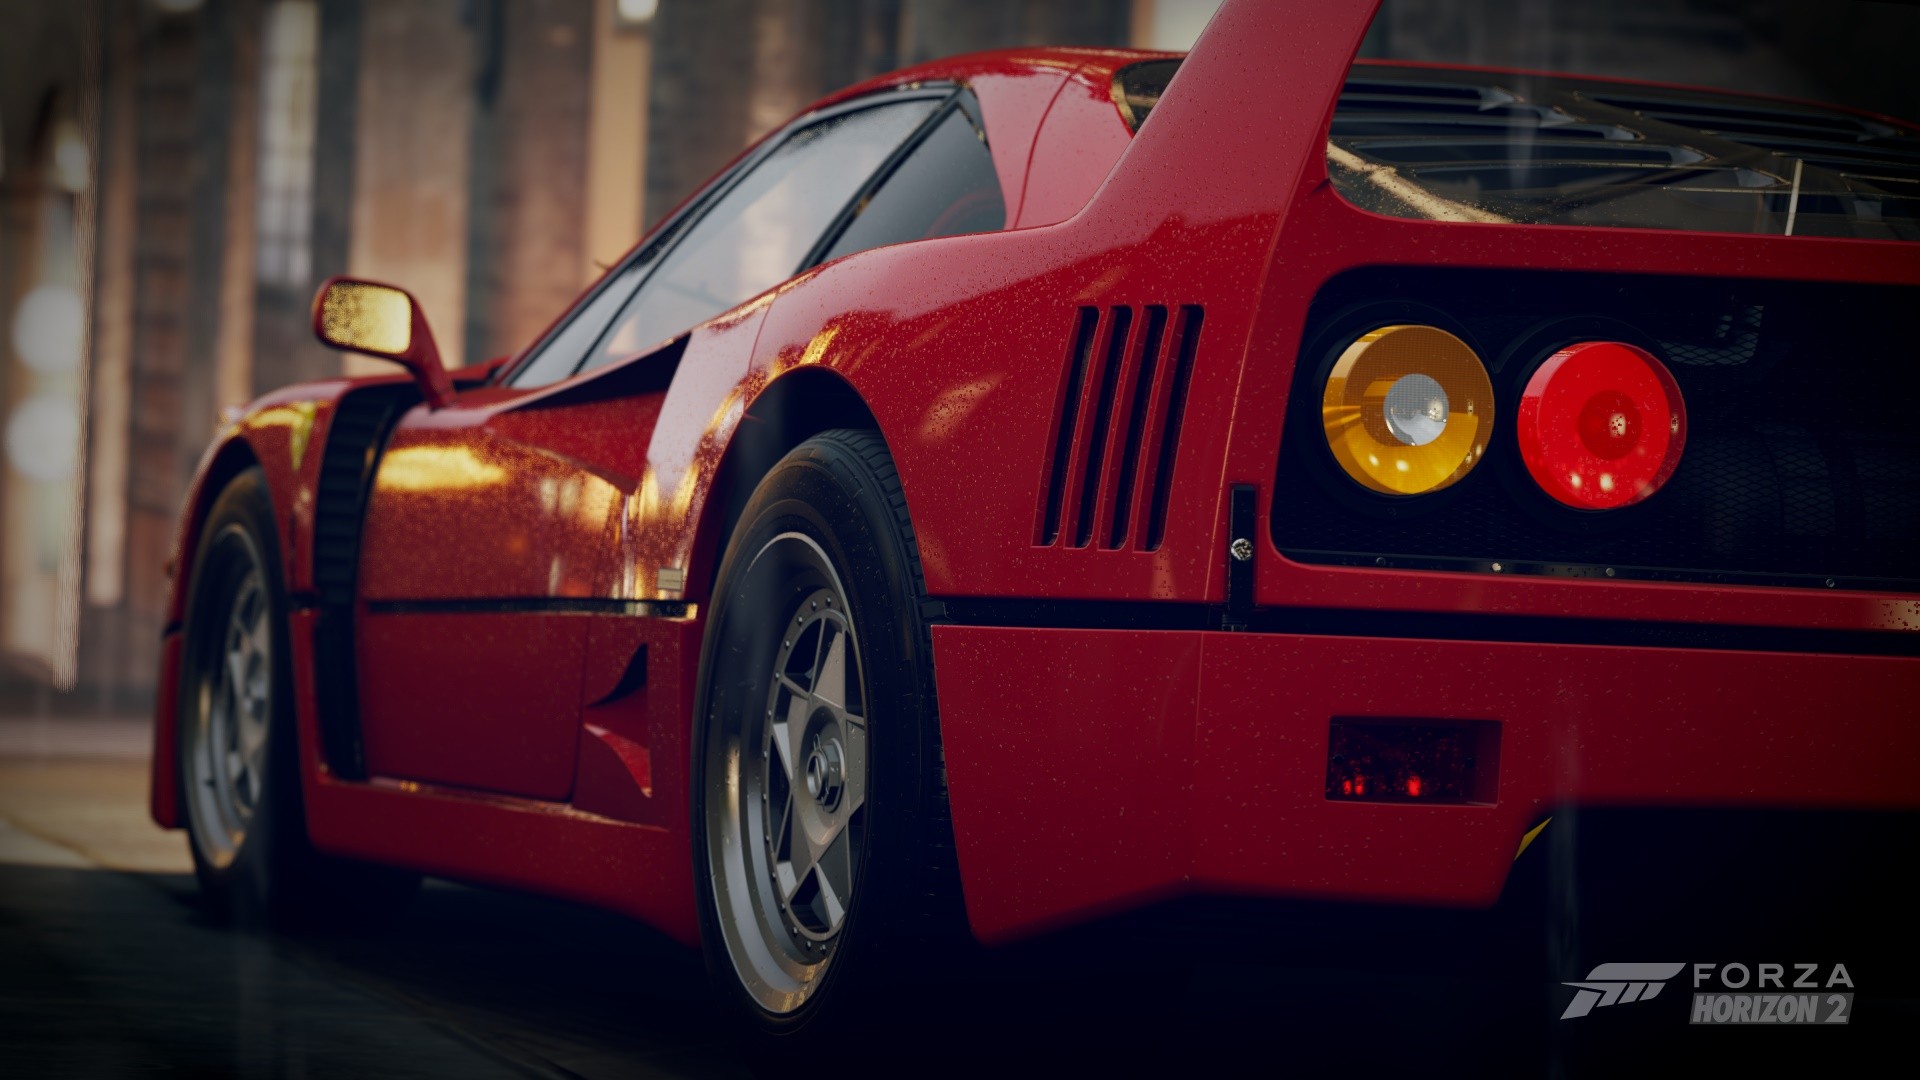 General 1920x1080 Ferrari F40 red cars vignette Forza Horizon 2 video games Ferrari car vehicle